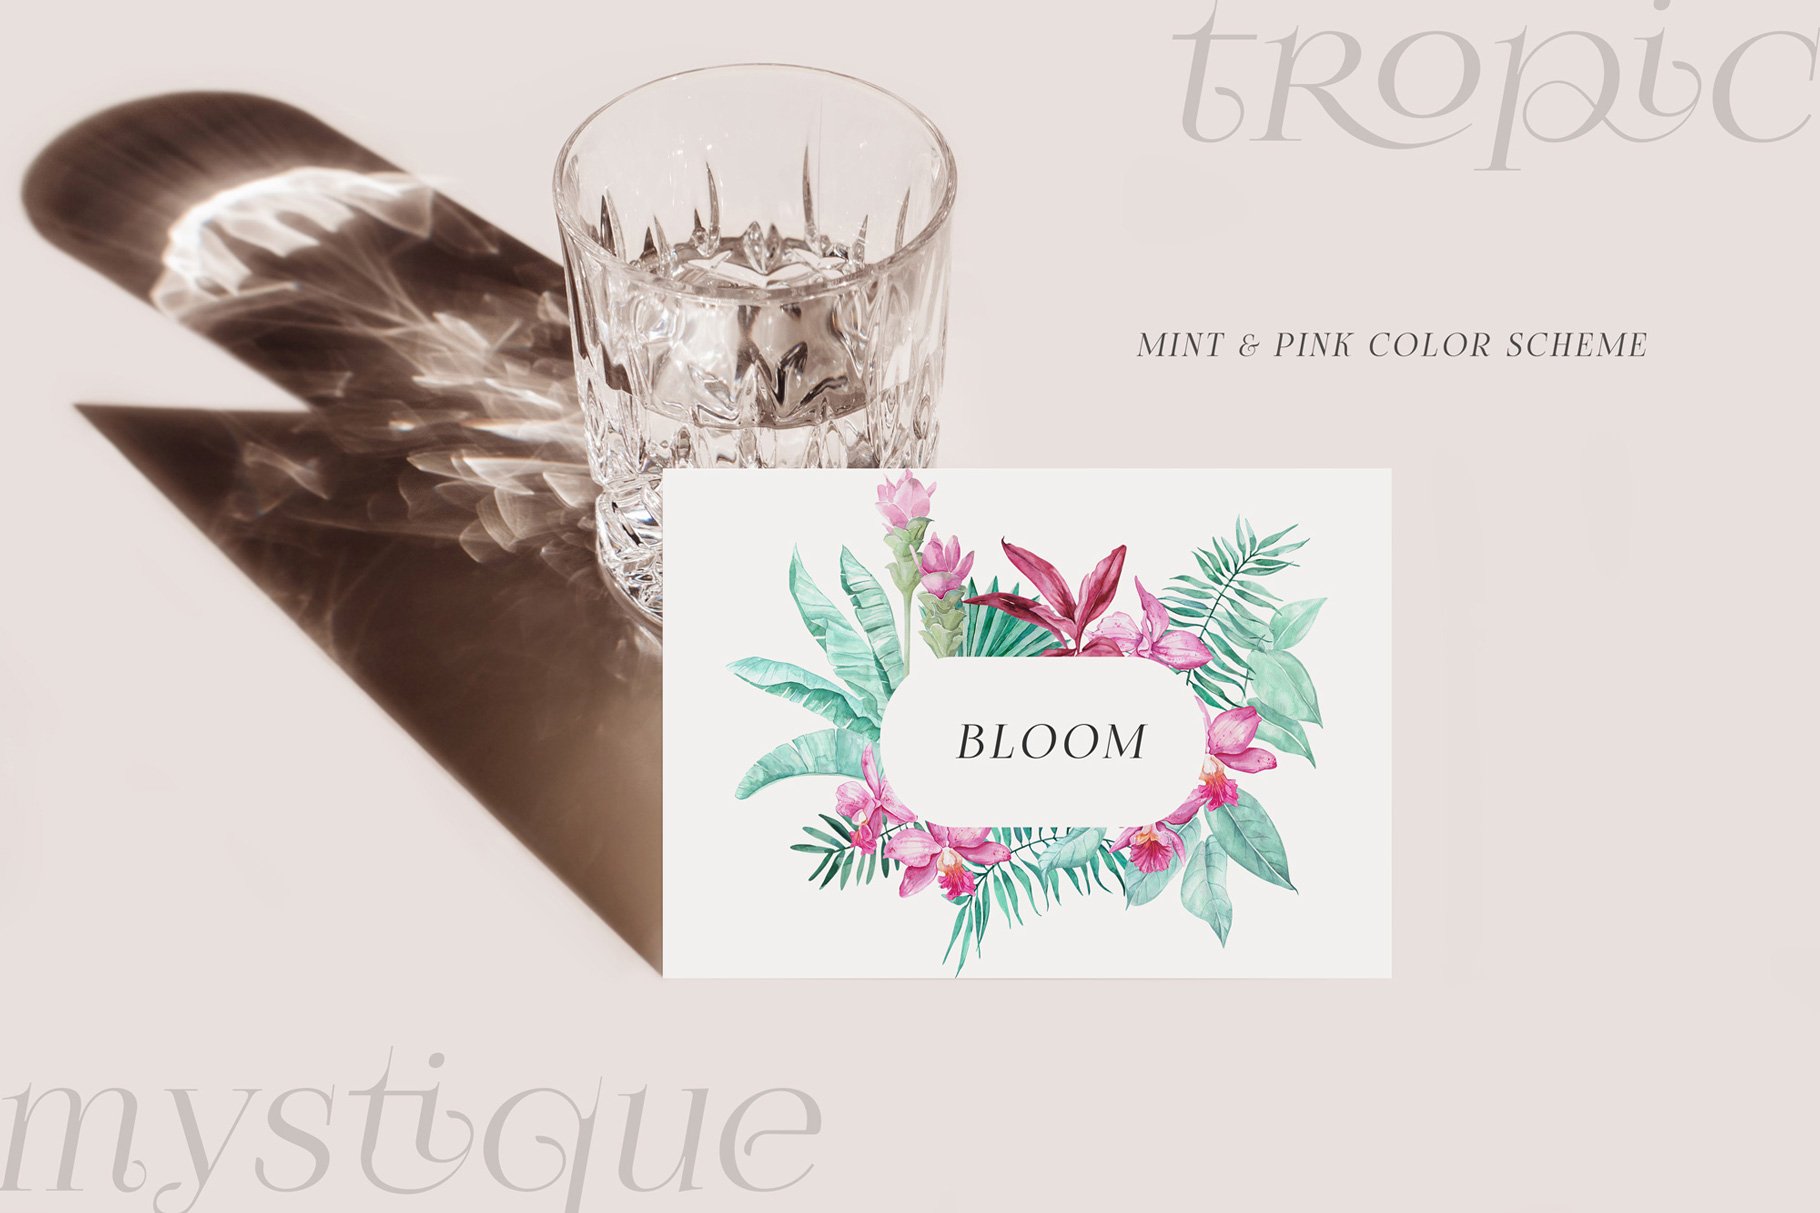 Tropic Mystique Watercolor Mint & Pink Collection